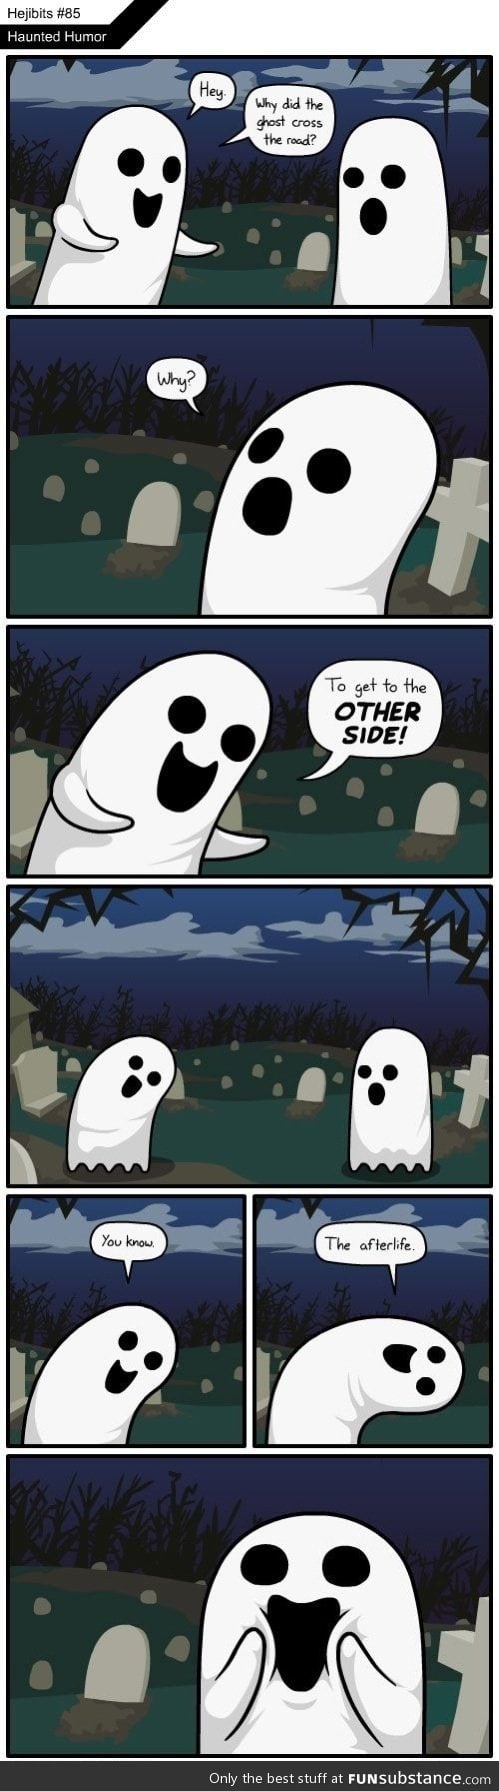 Haunted humor